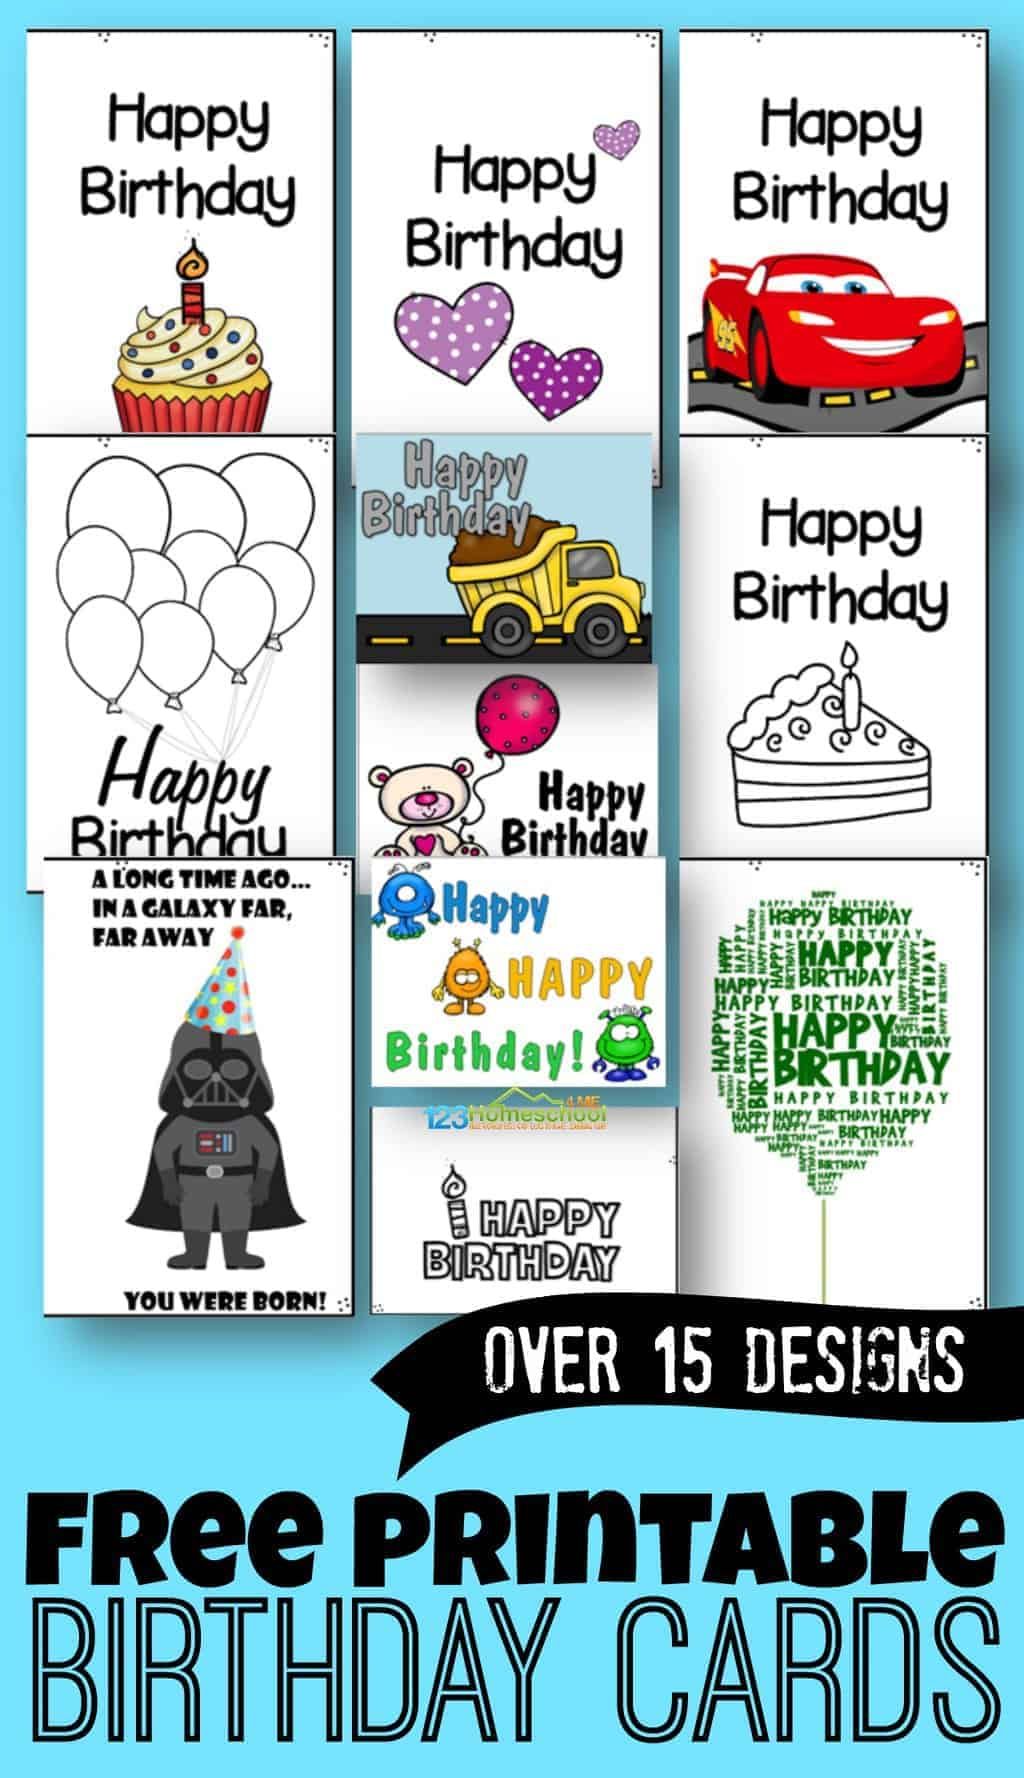 FREE Printable Birthday Cards HD Wallpaper